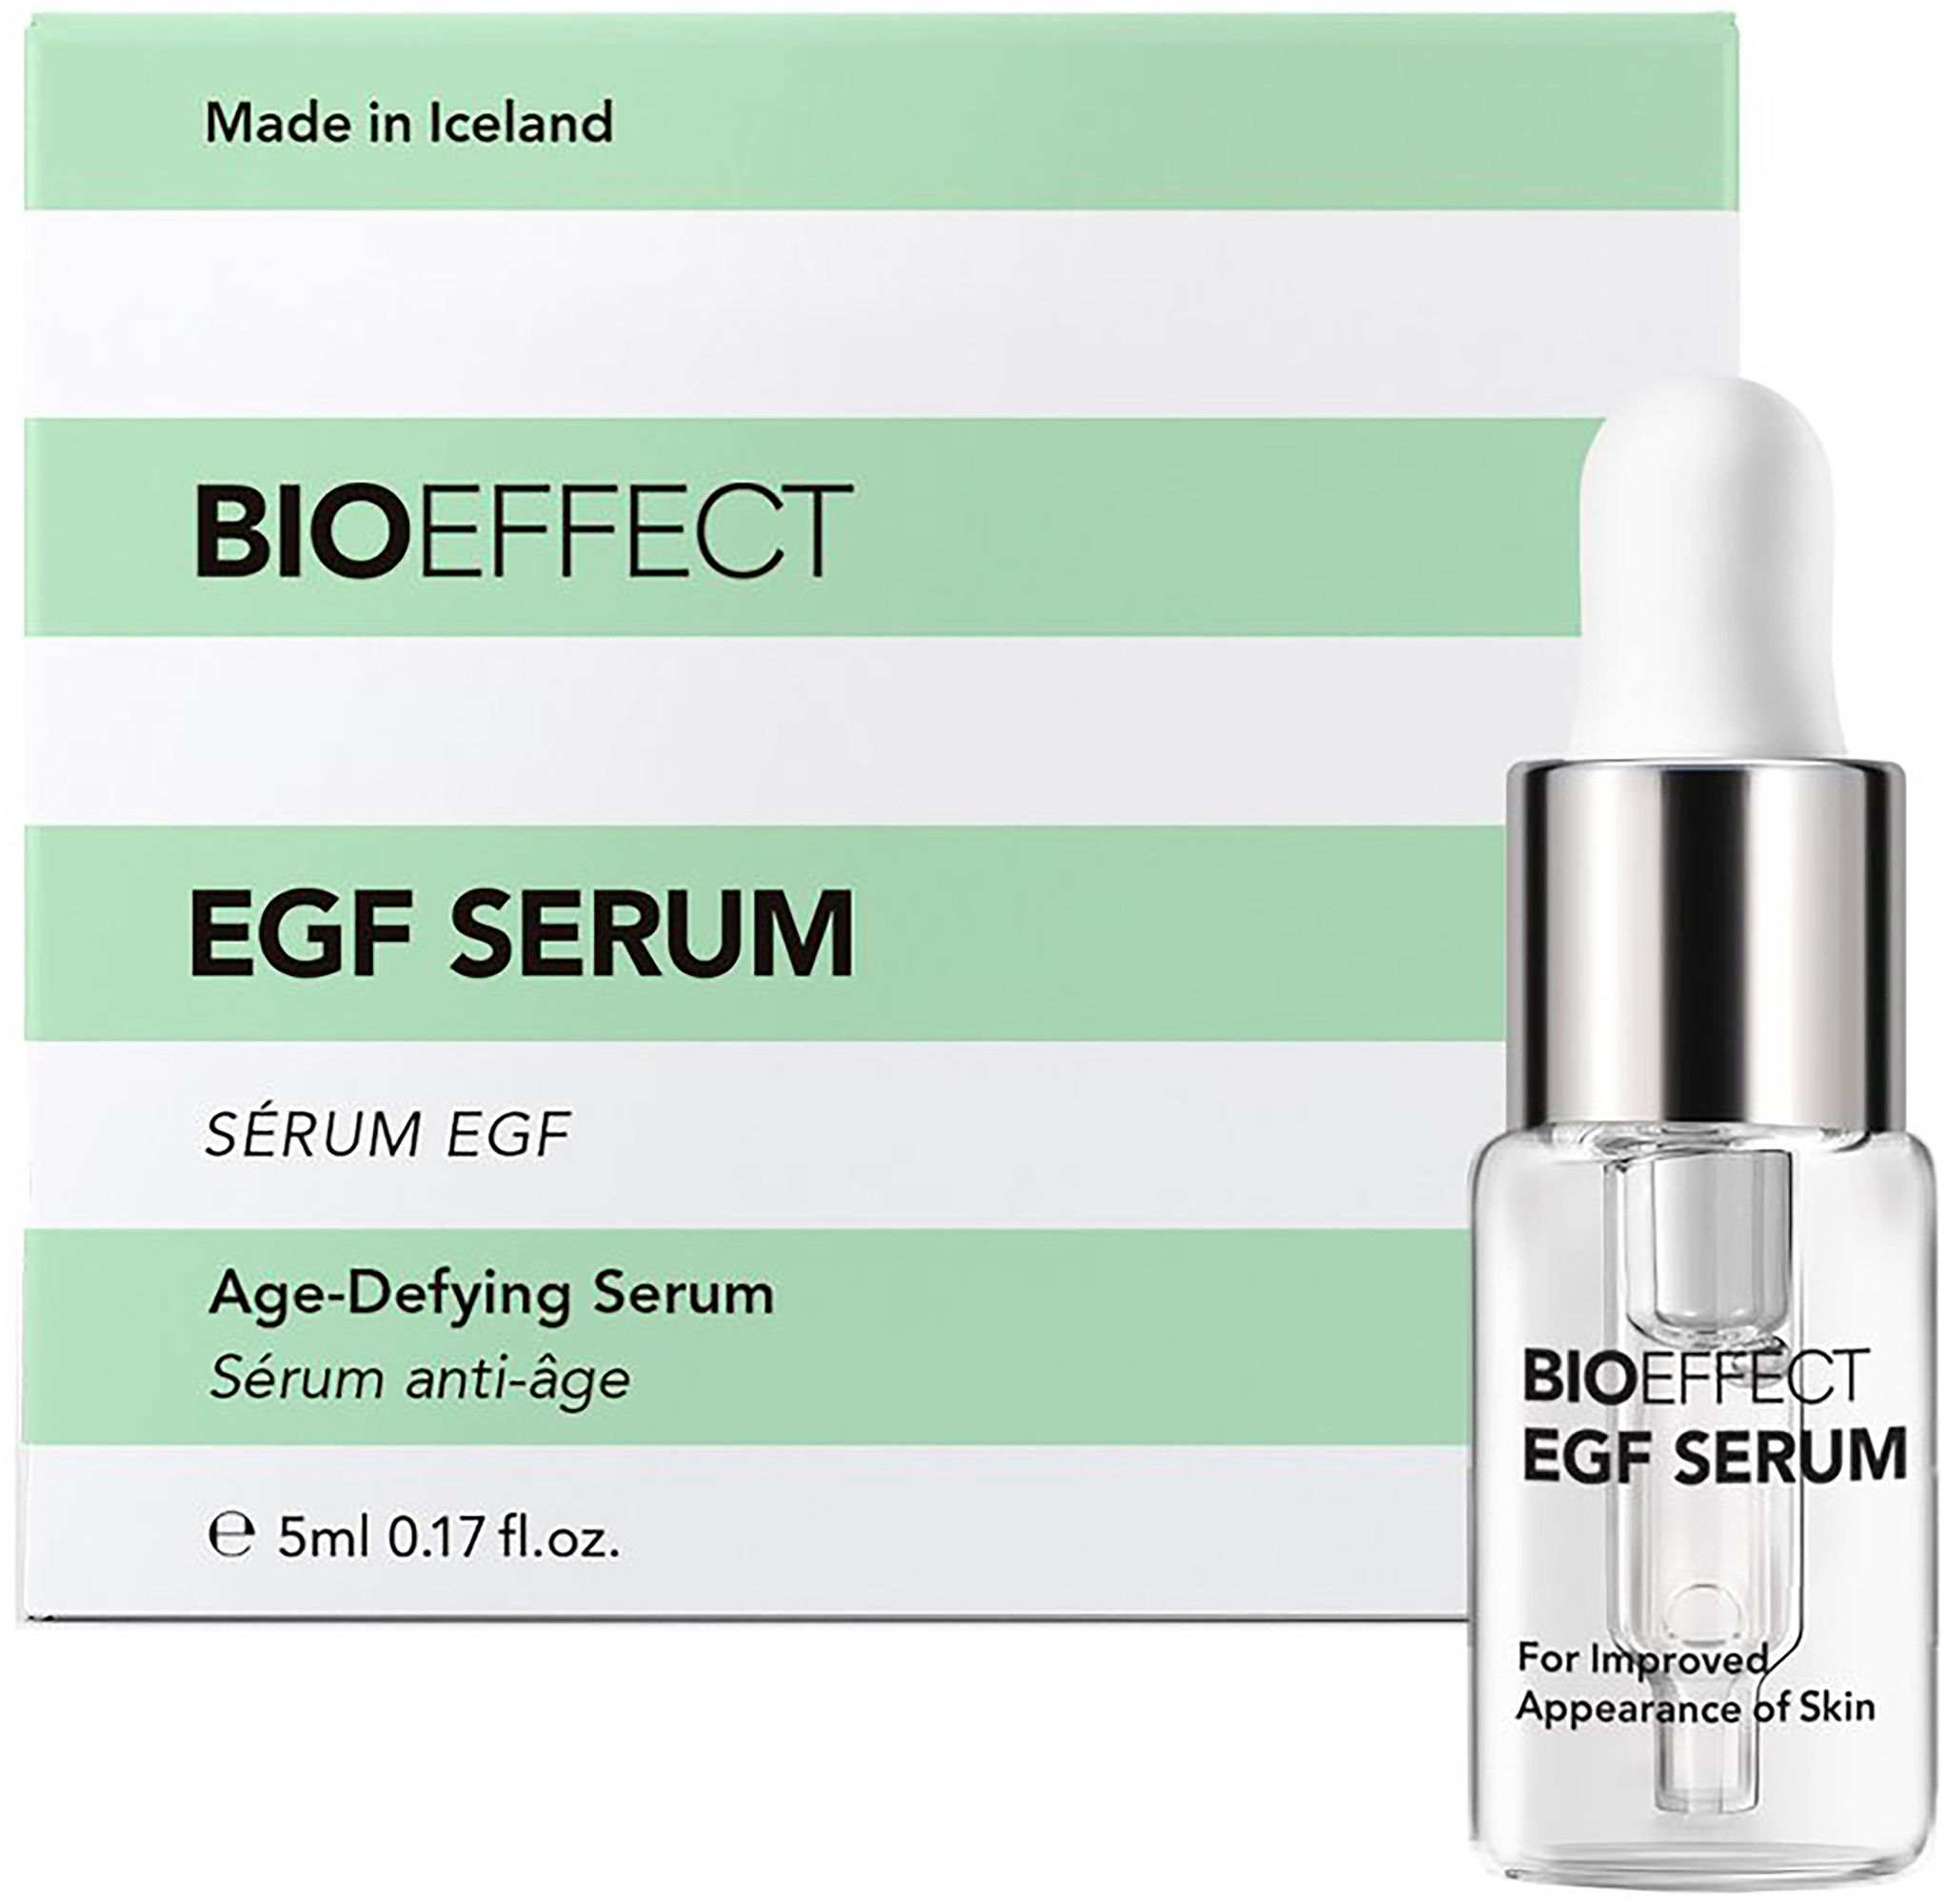 bioeffect serum suisse anti aging)